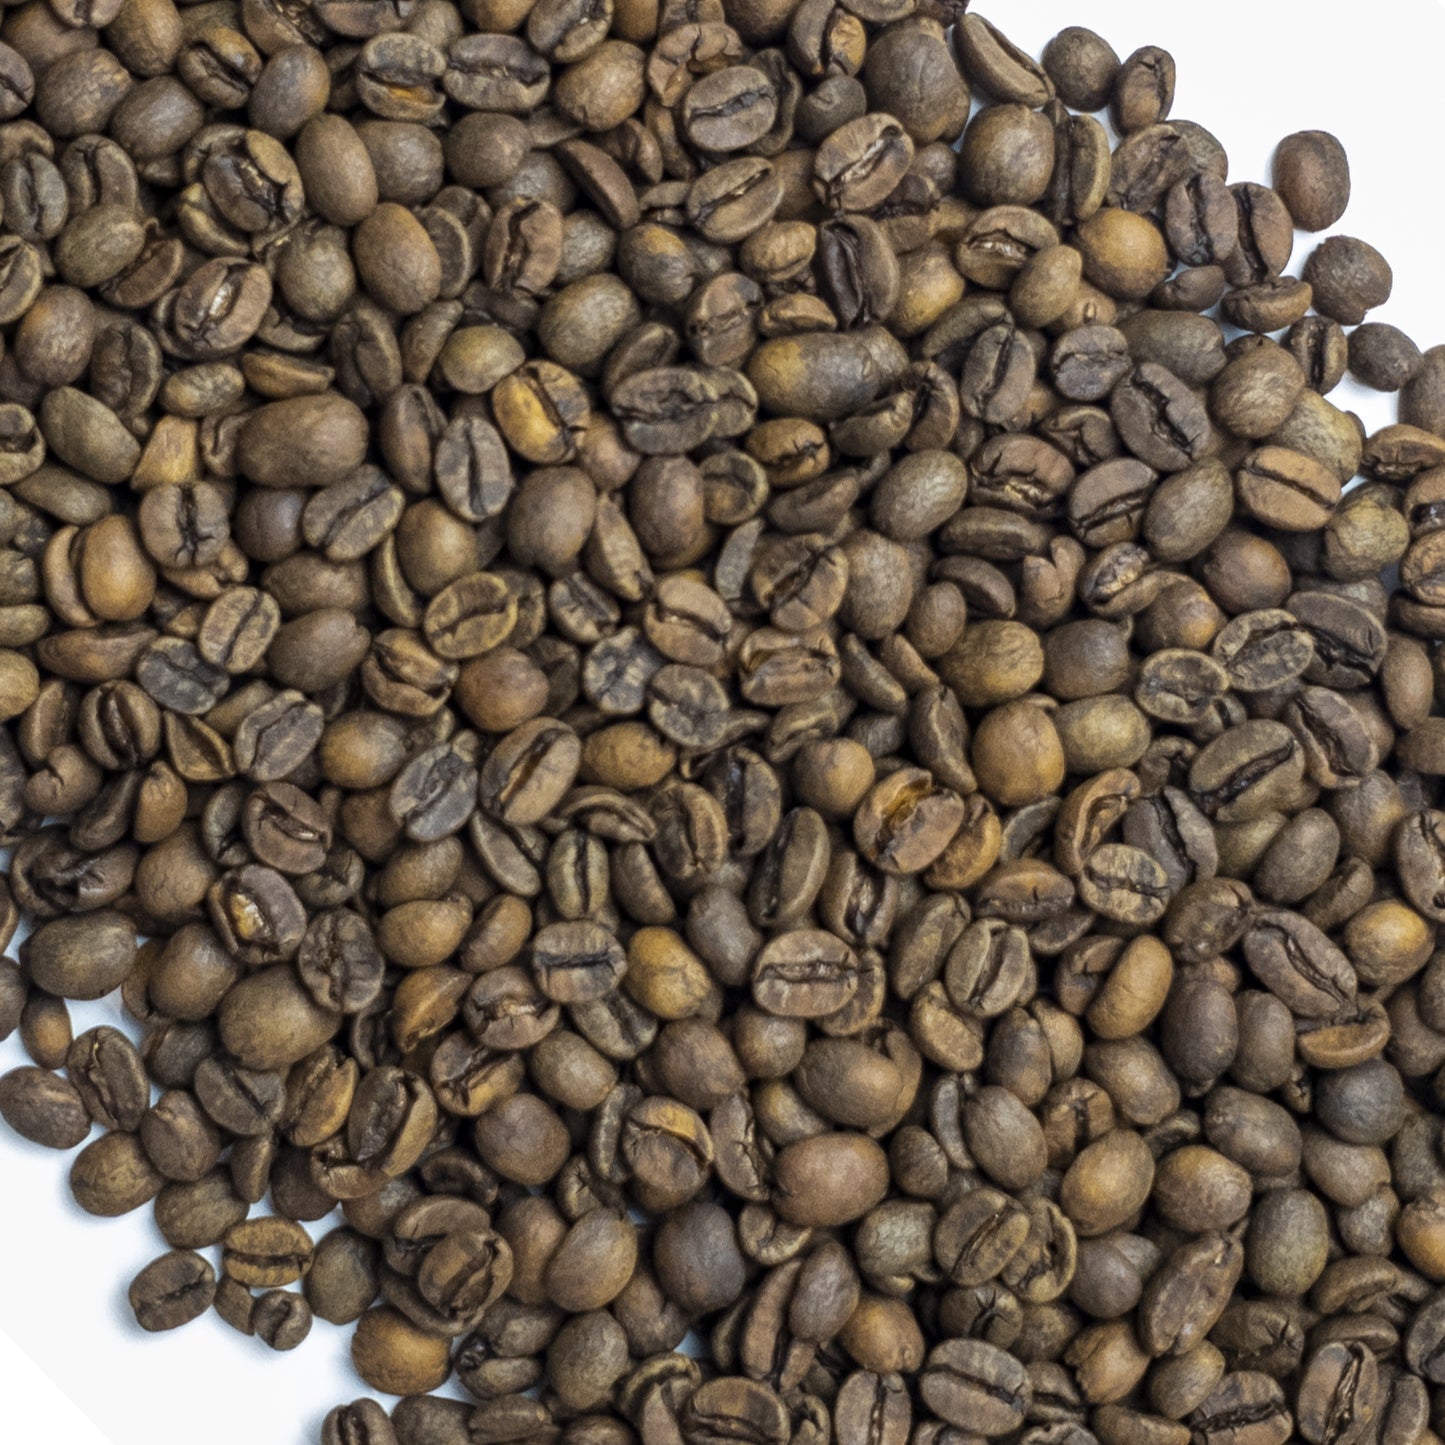 
                  
                    Spring Creek | Ground Coffee | Decaffeinated | Rose Rock Coffee | Air Roasted | 12oz | 1lb | 5lb | Sample
                  
                